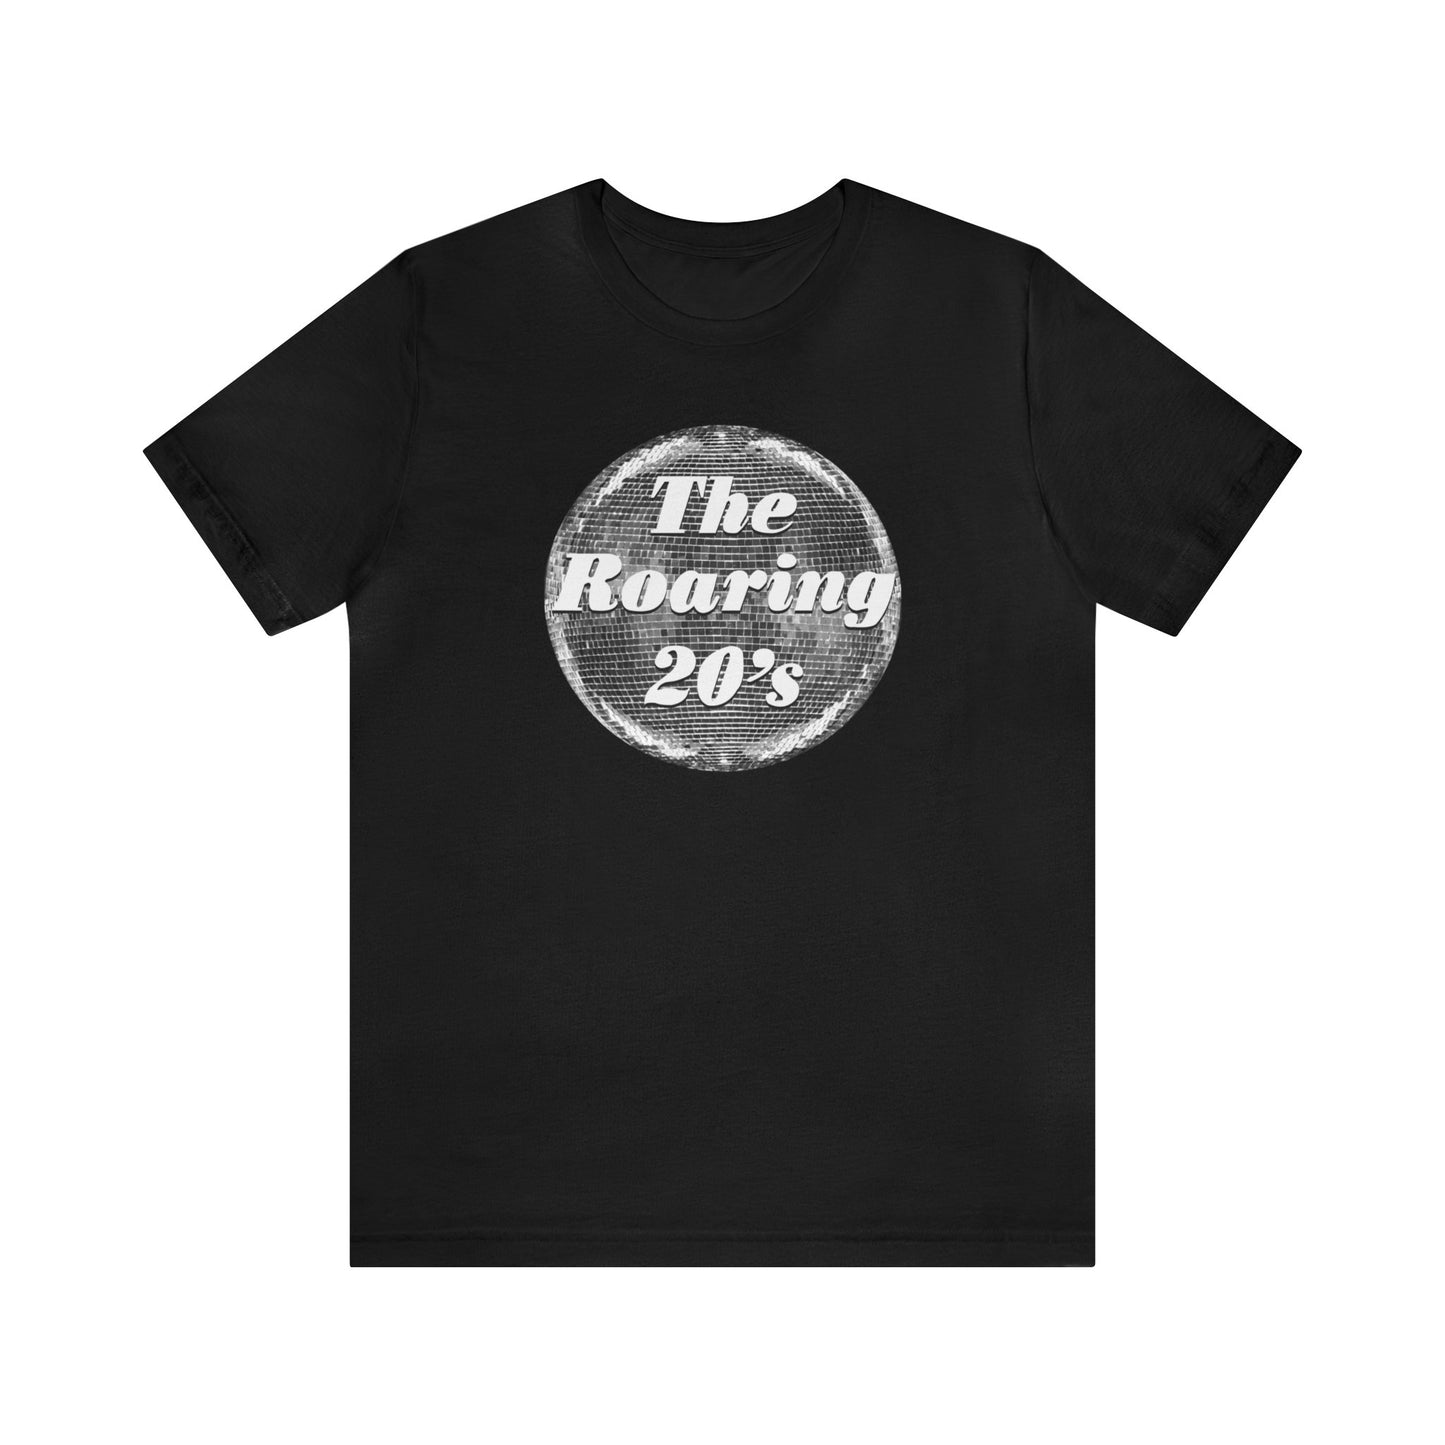 Roaring 20s - Unisex T-Shirt